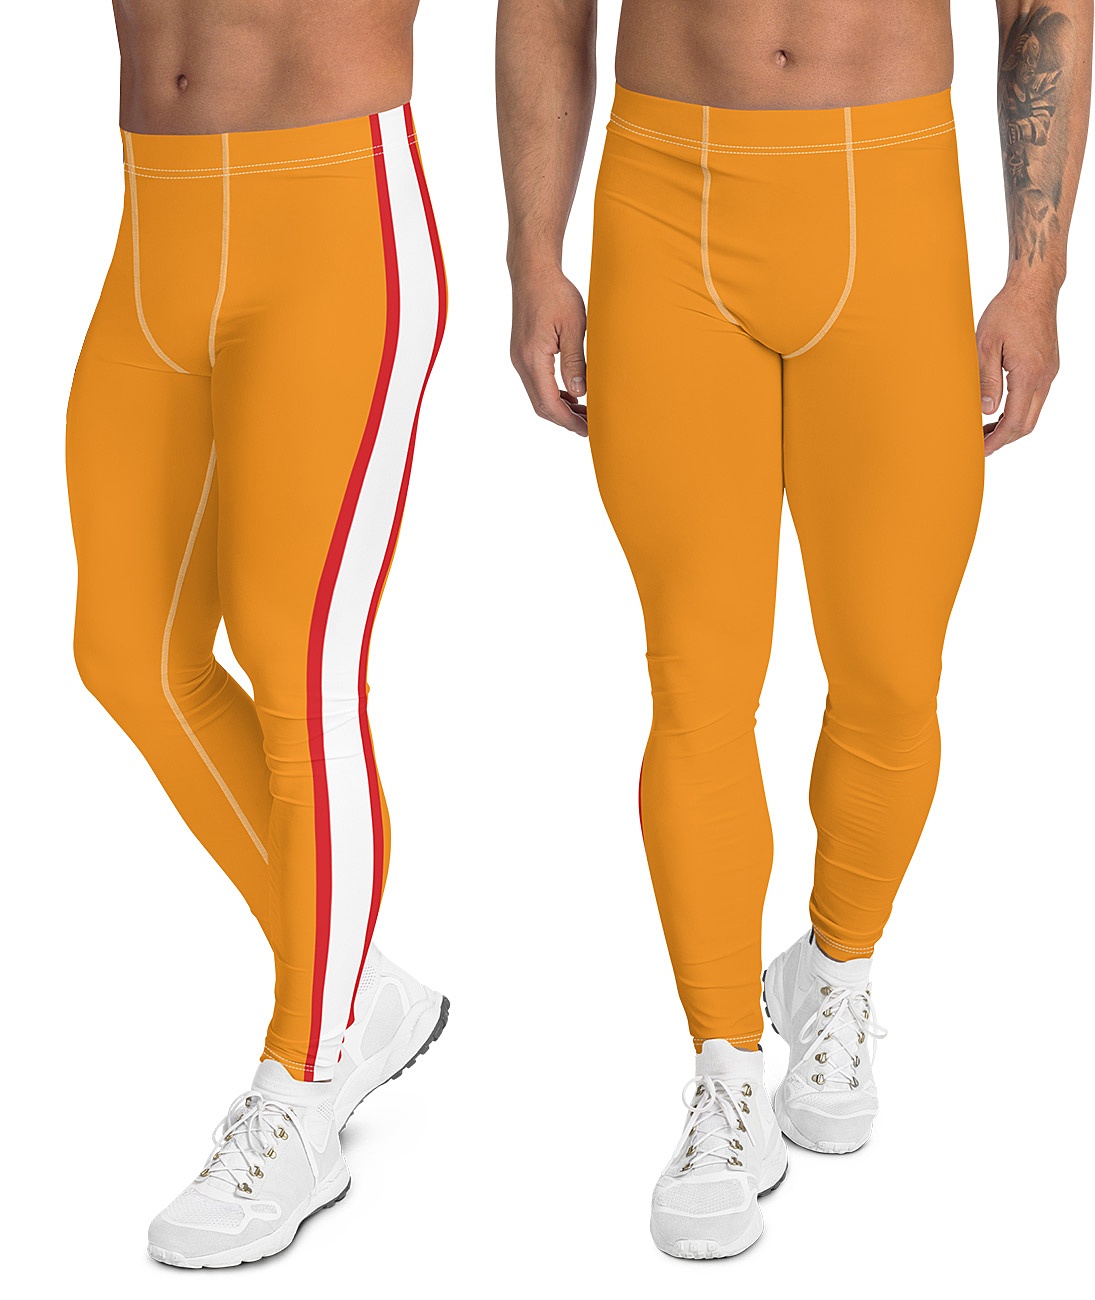 Retro Stripe Tampa Bay Buccaneers Football Uniform Leggings For Men ...